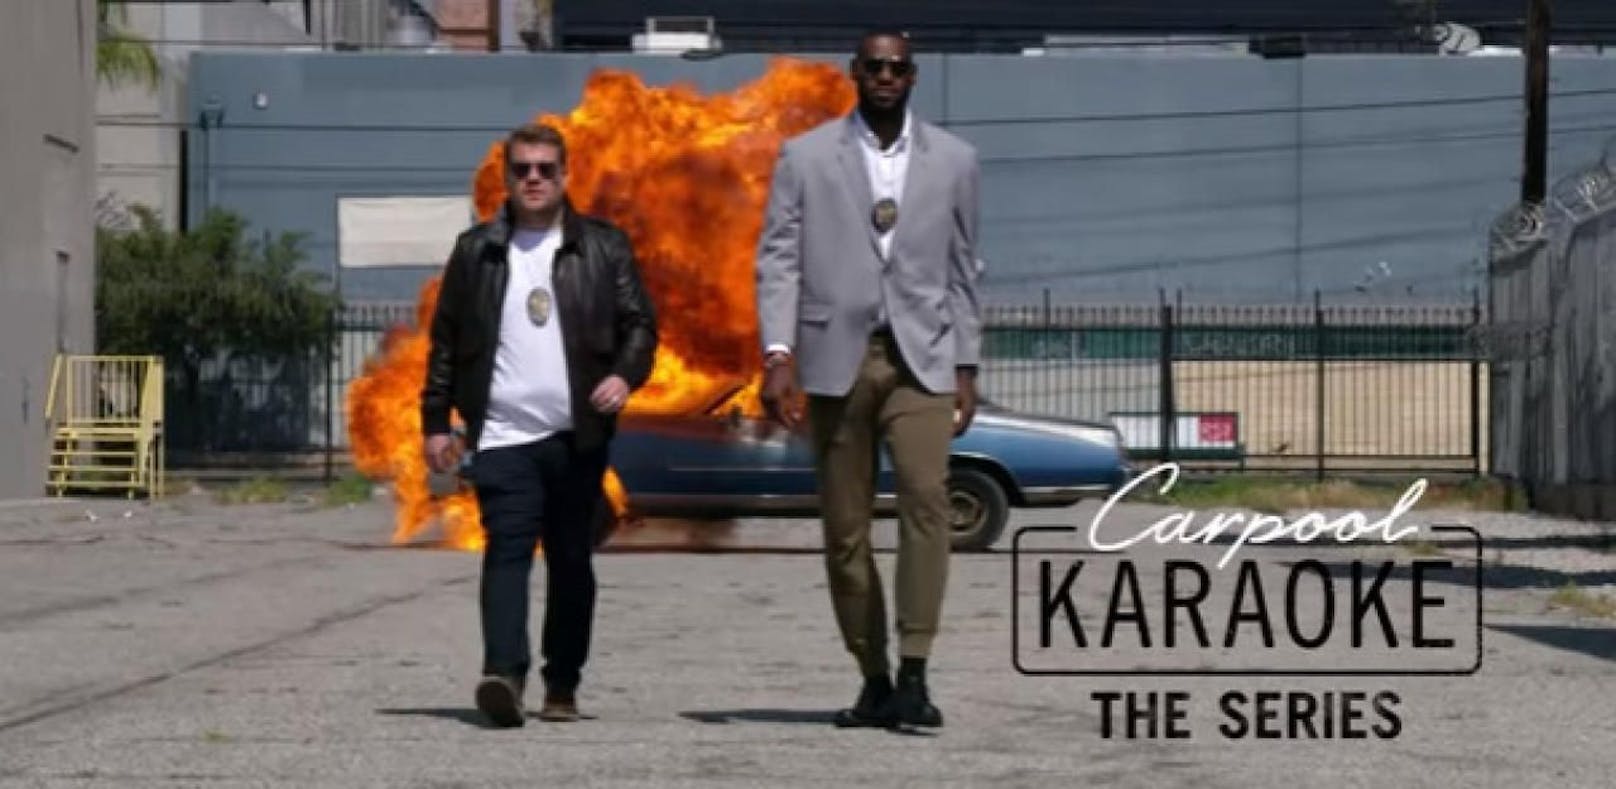 Carpool Karaoke geht in Serie - hier ist der Trailer!